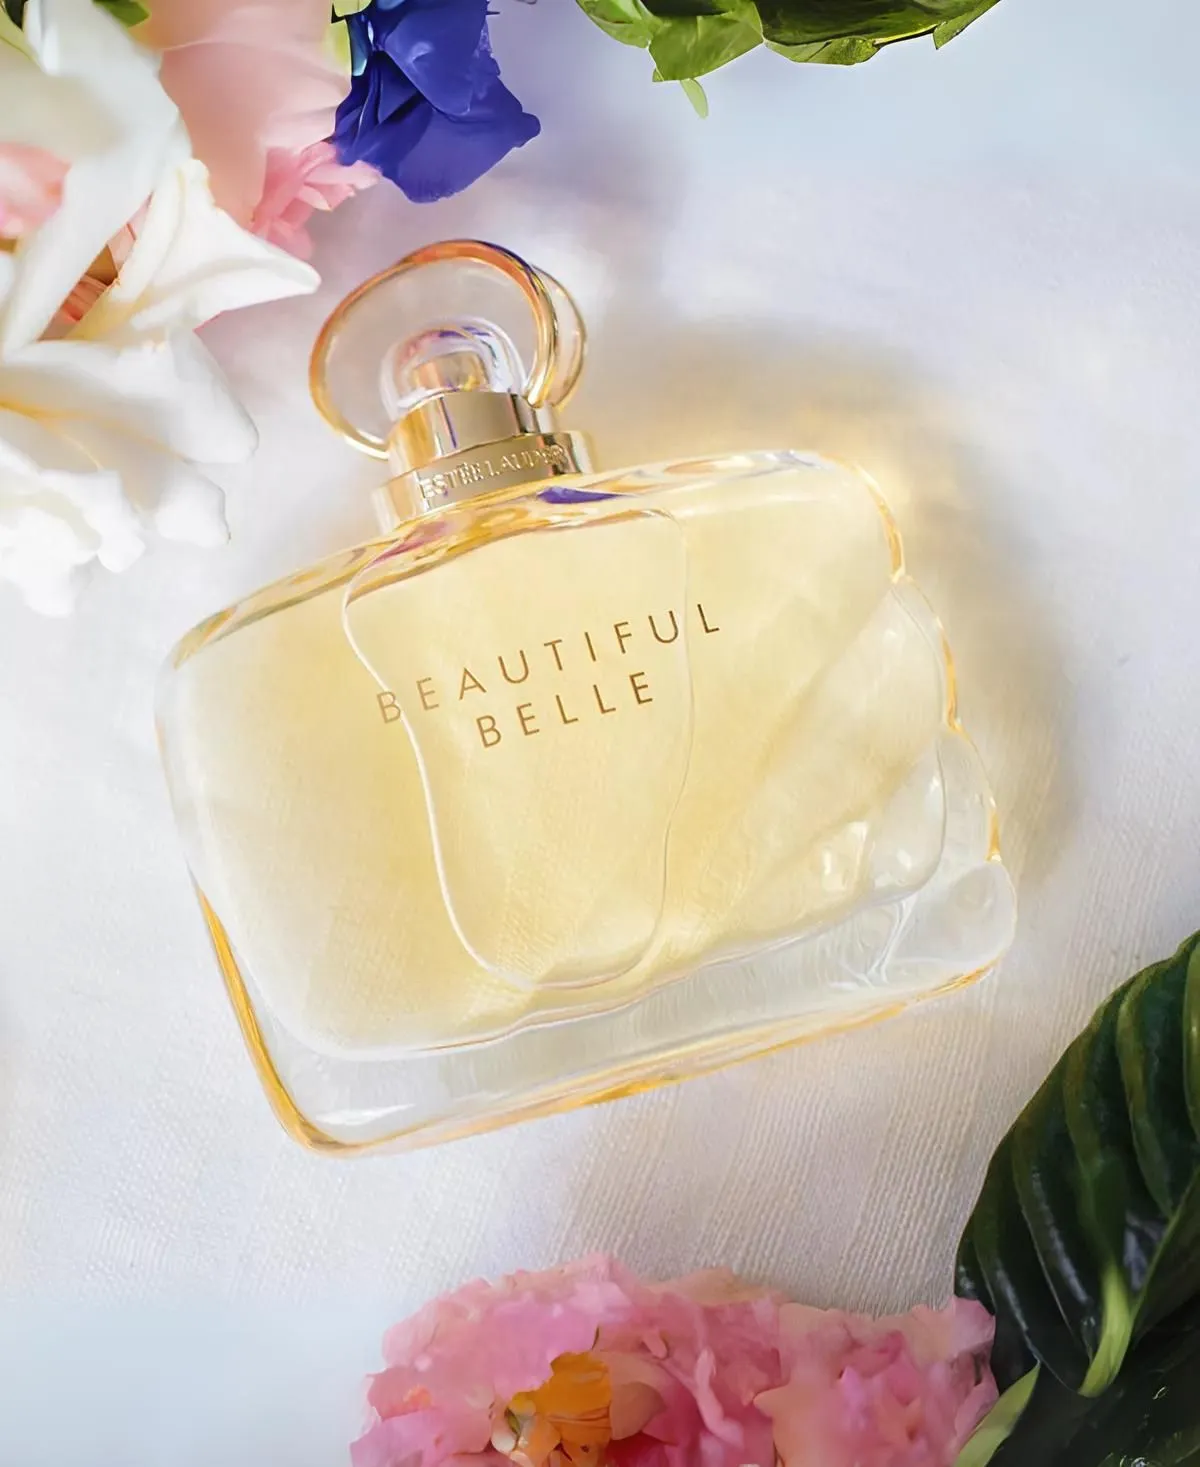 Estee Lauder Beautiful Belle for Women Eau de Parfum (EDP) Spray